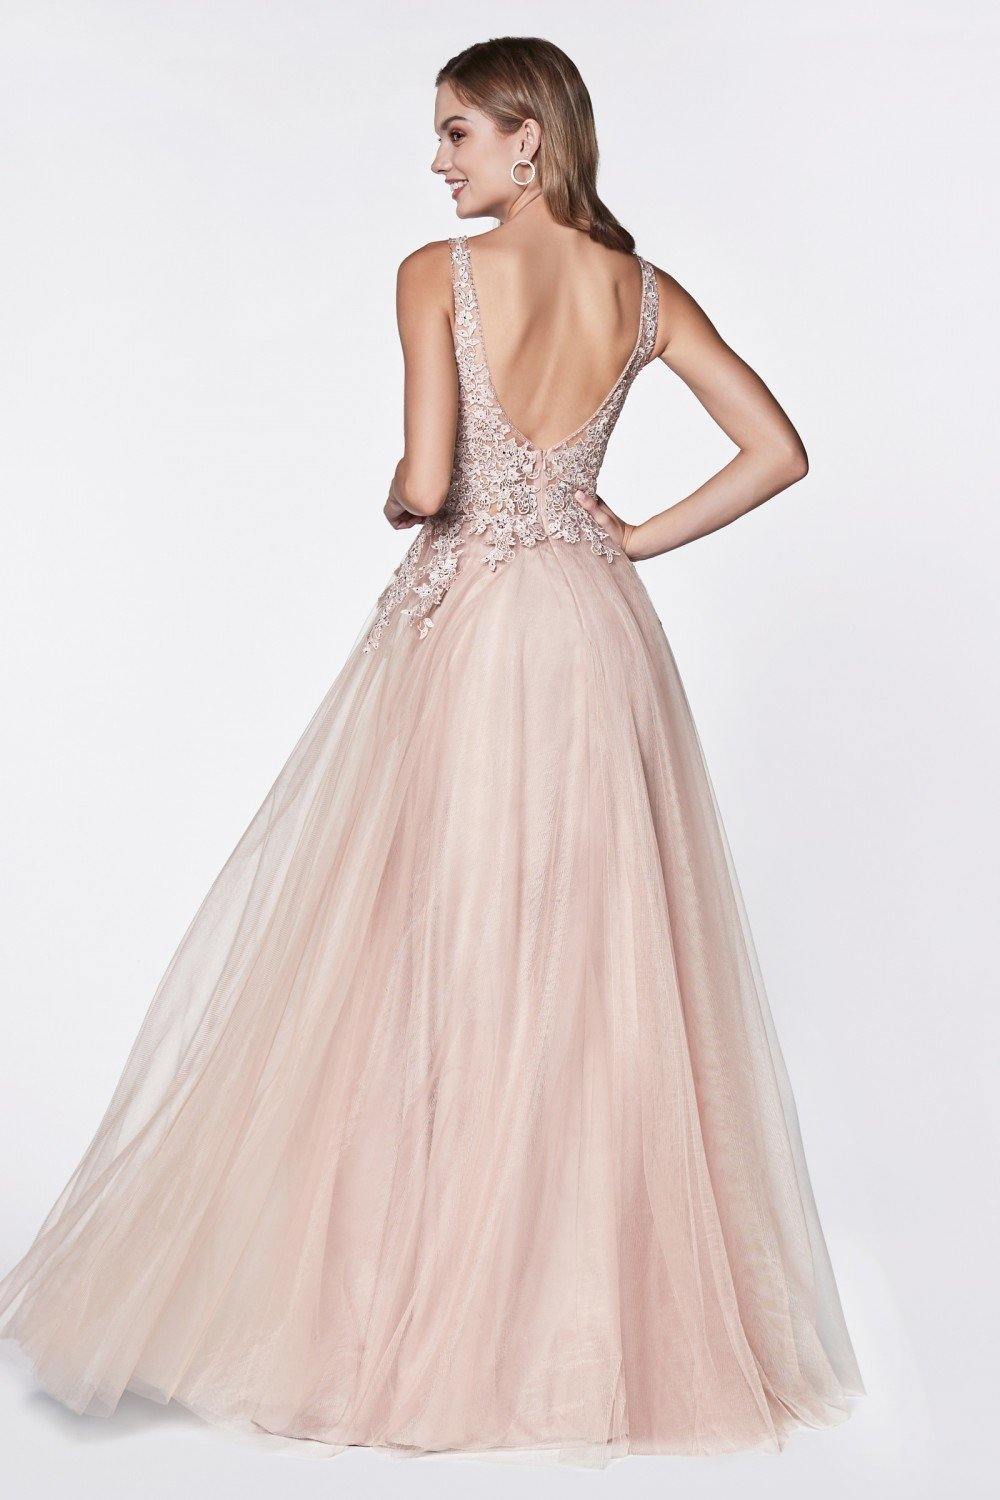 Long Sleeveless Evening Gown Formal Dress - The Dress Outlet Cinderella Divine